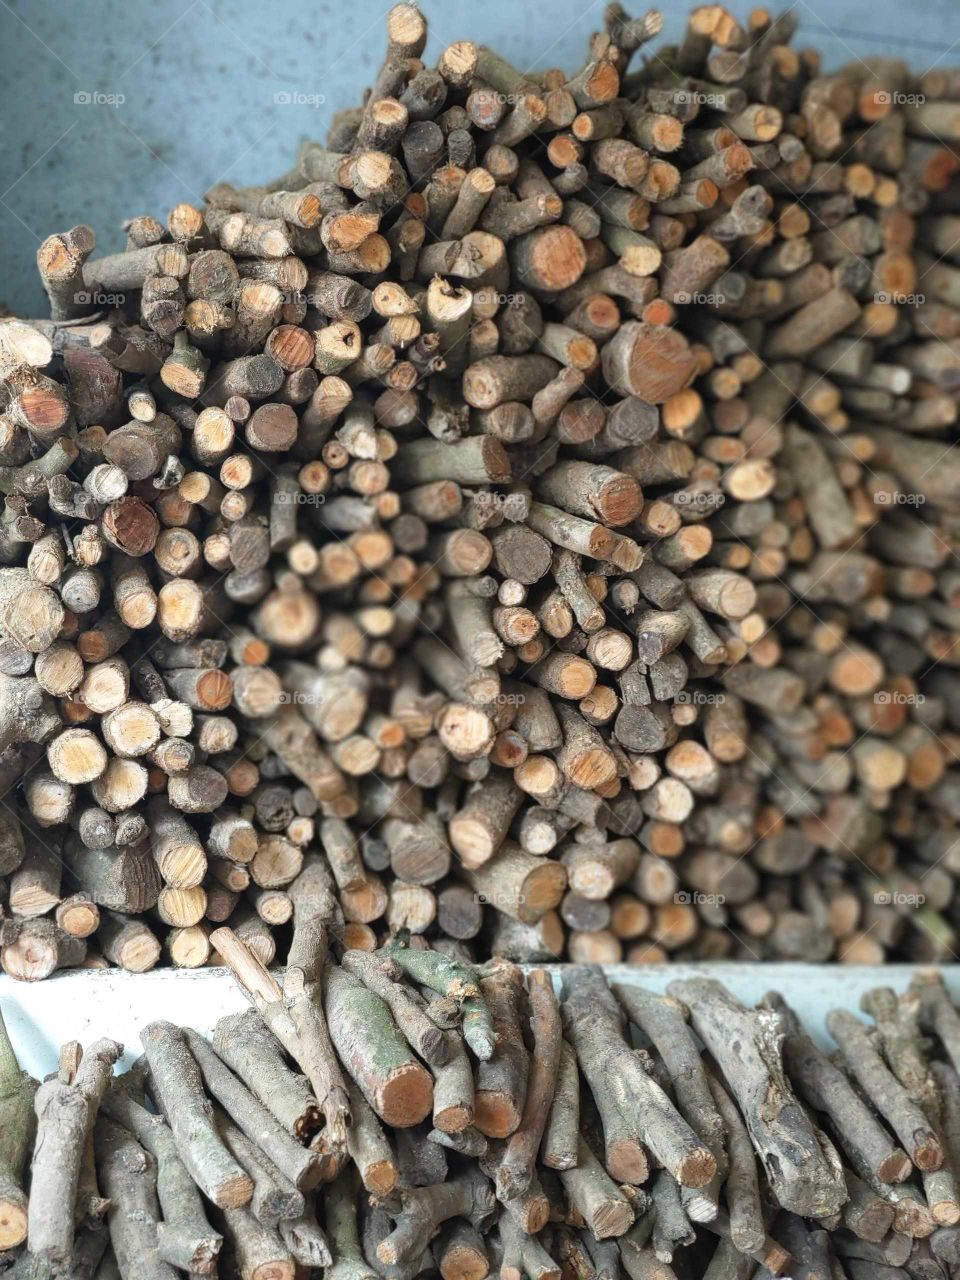 Shapes:Ellipse. firewood, natural beautiful round wood.